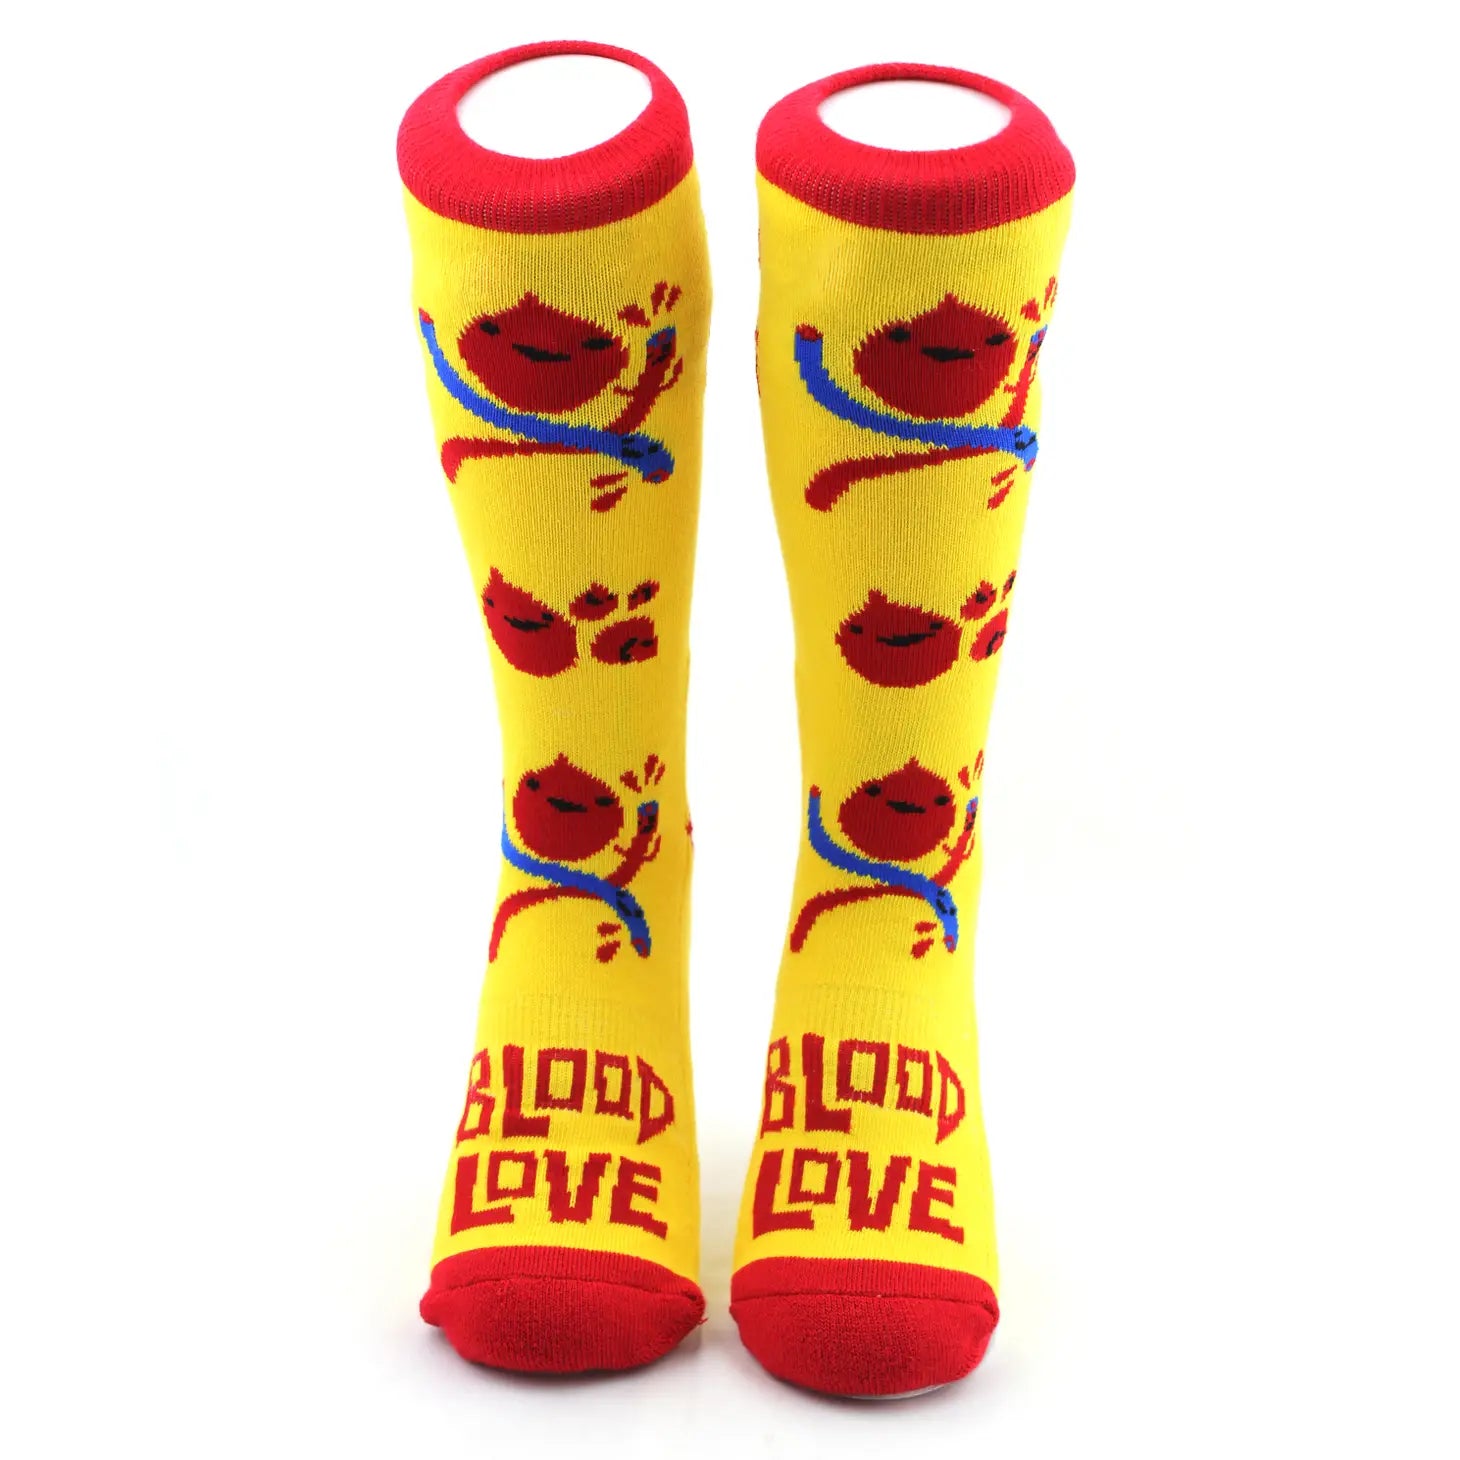 socks blood - Blood Love